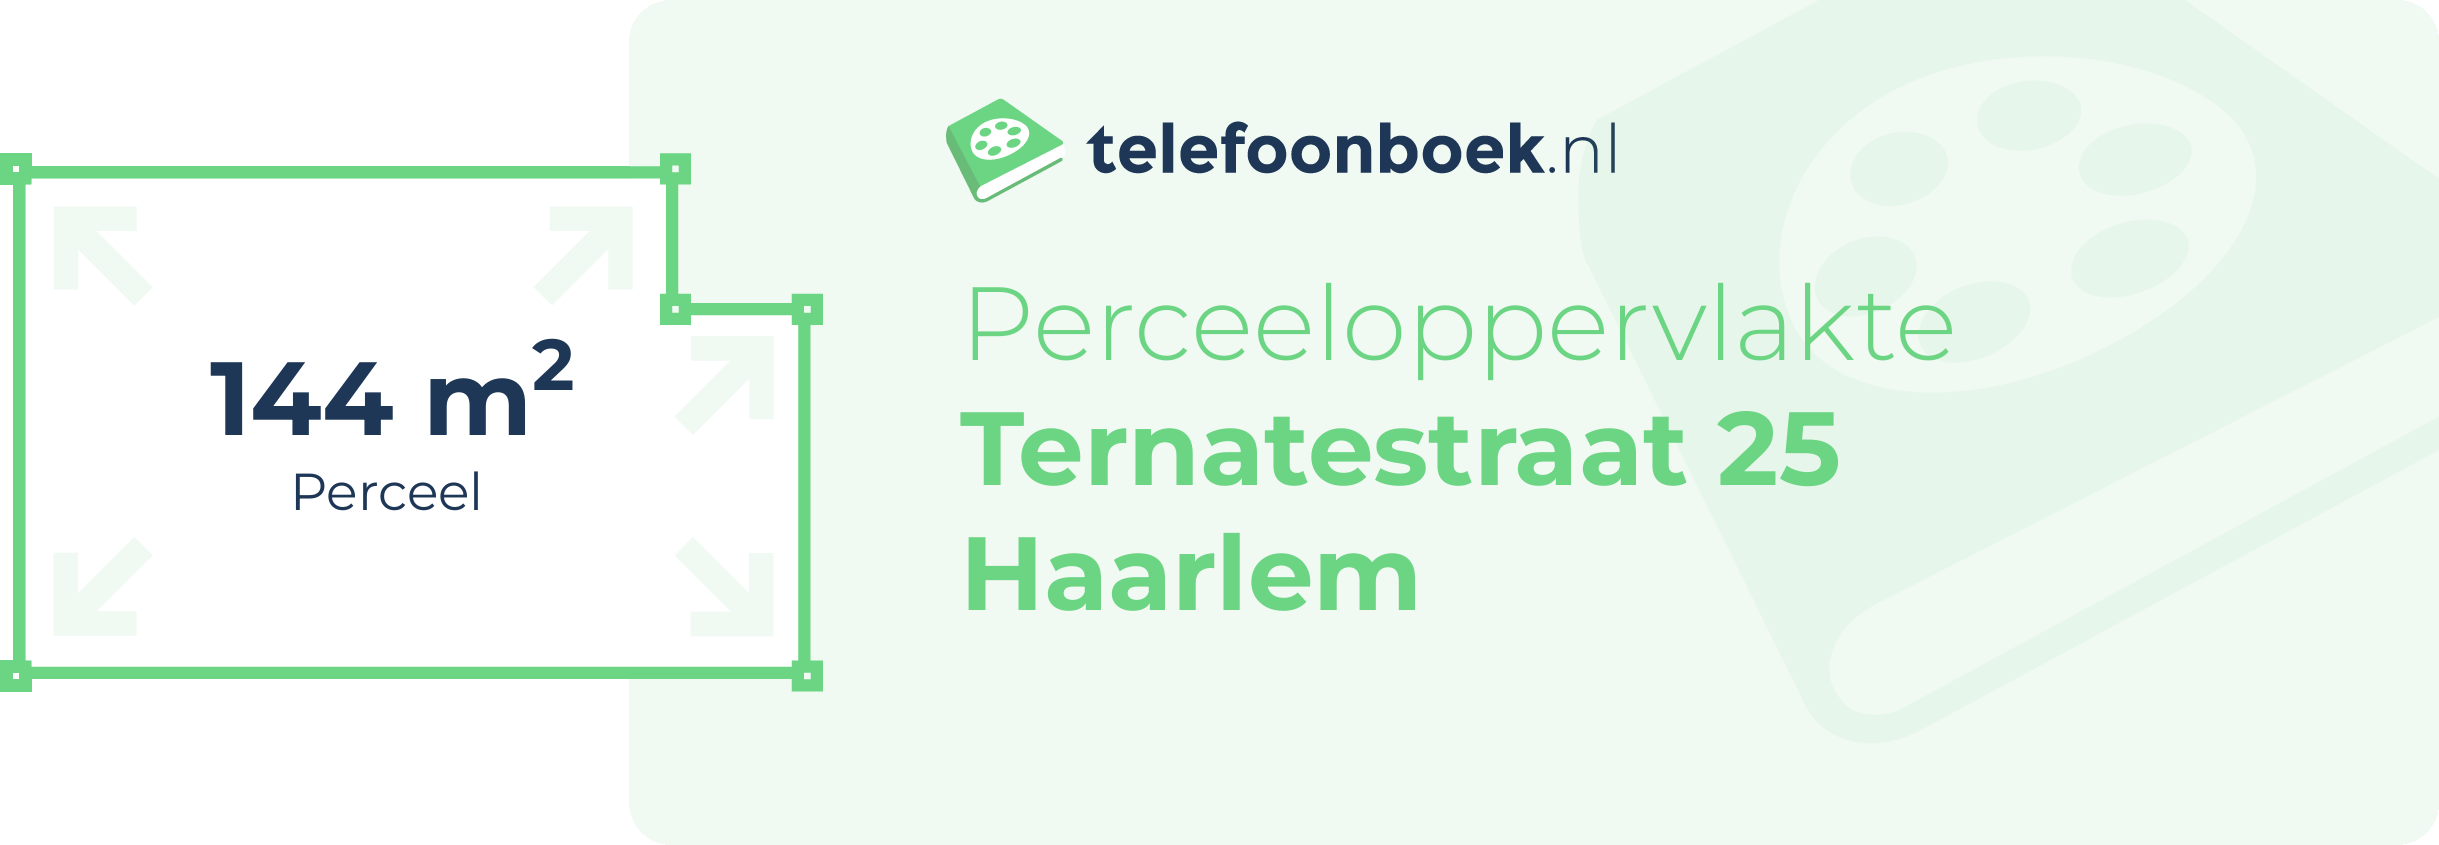 Perceeloppervlakte Ternatestraat 25 Haarlem